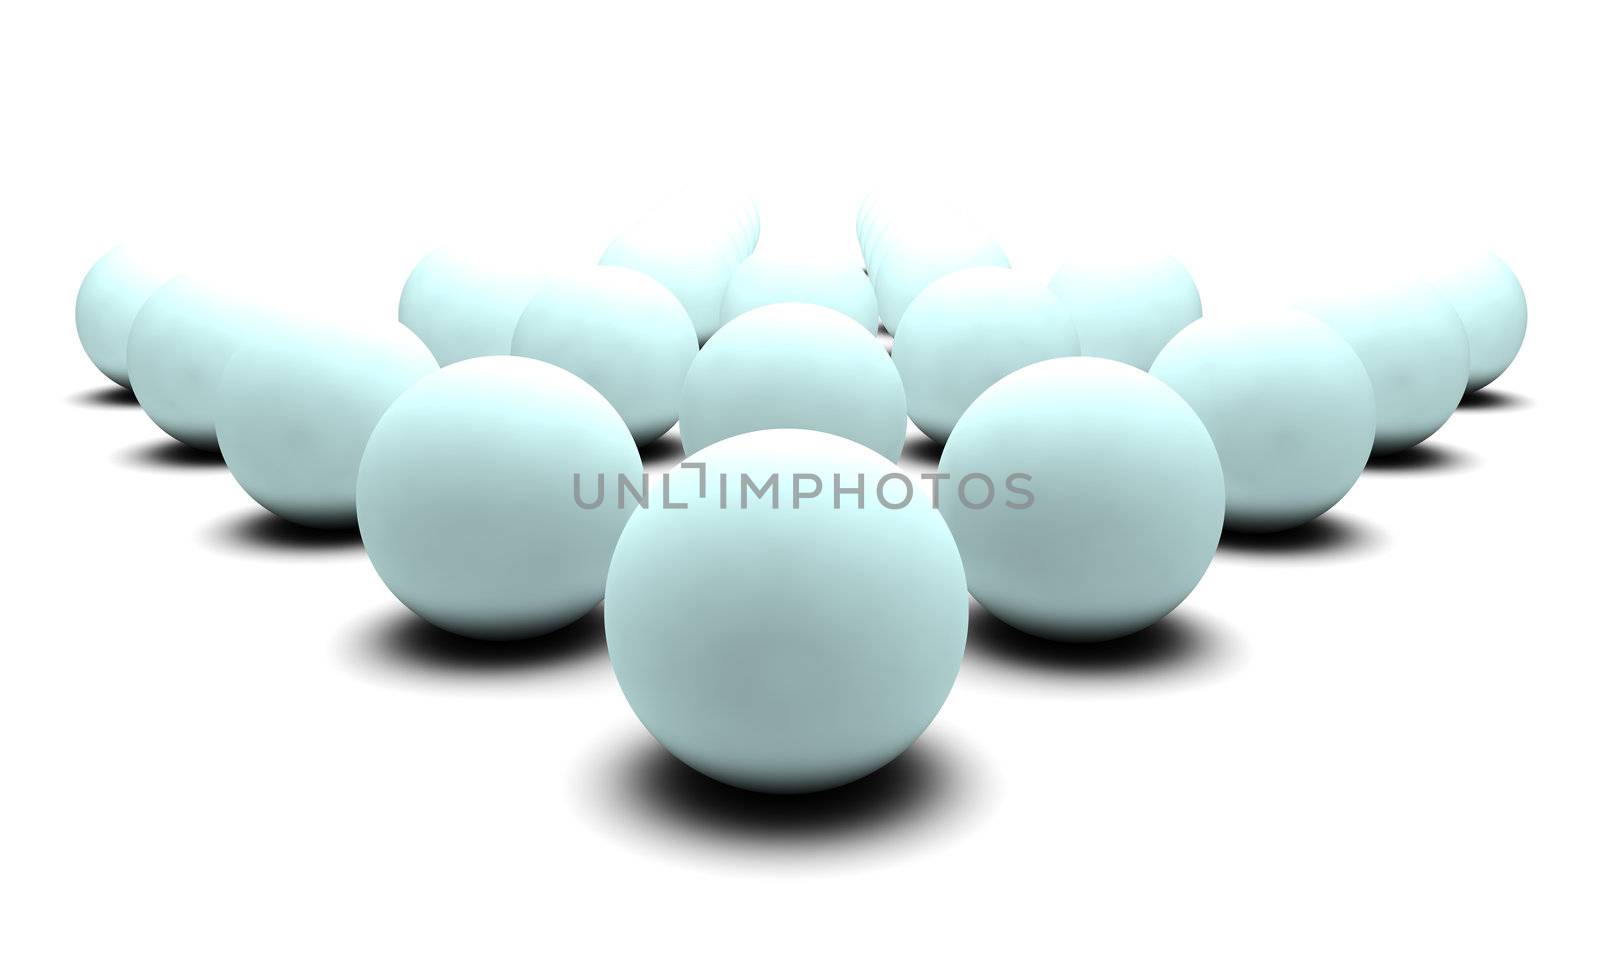 Digital Spheres in 3d on White Background